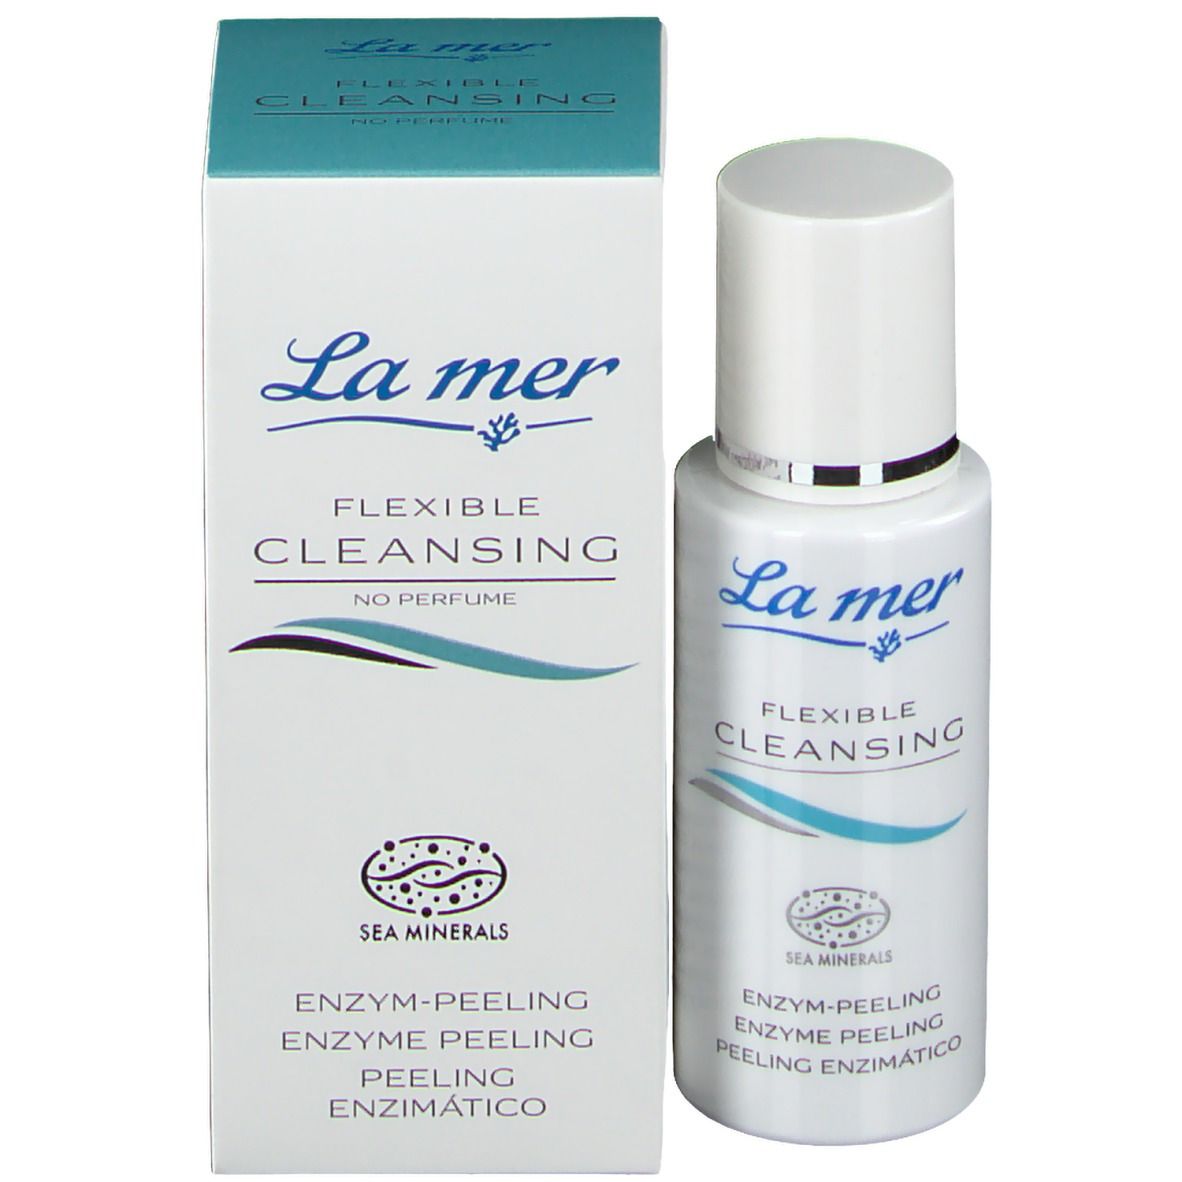 La mer FLEXIBLE Cleansing Enzym-Peeling